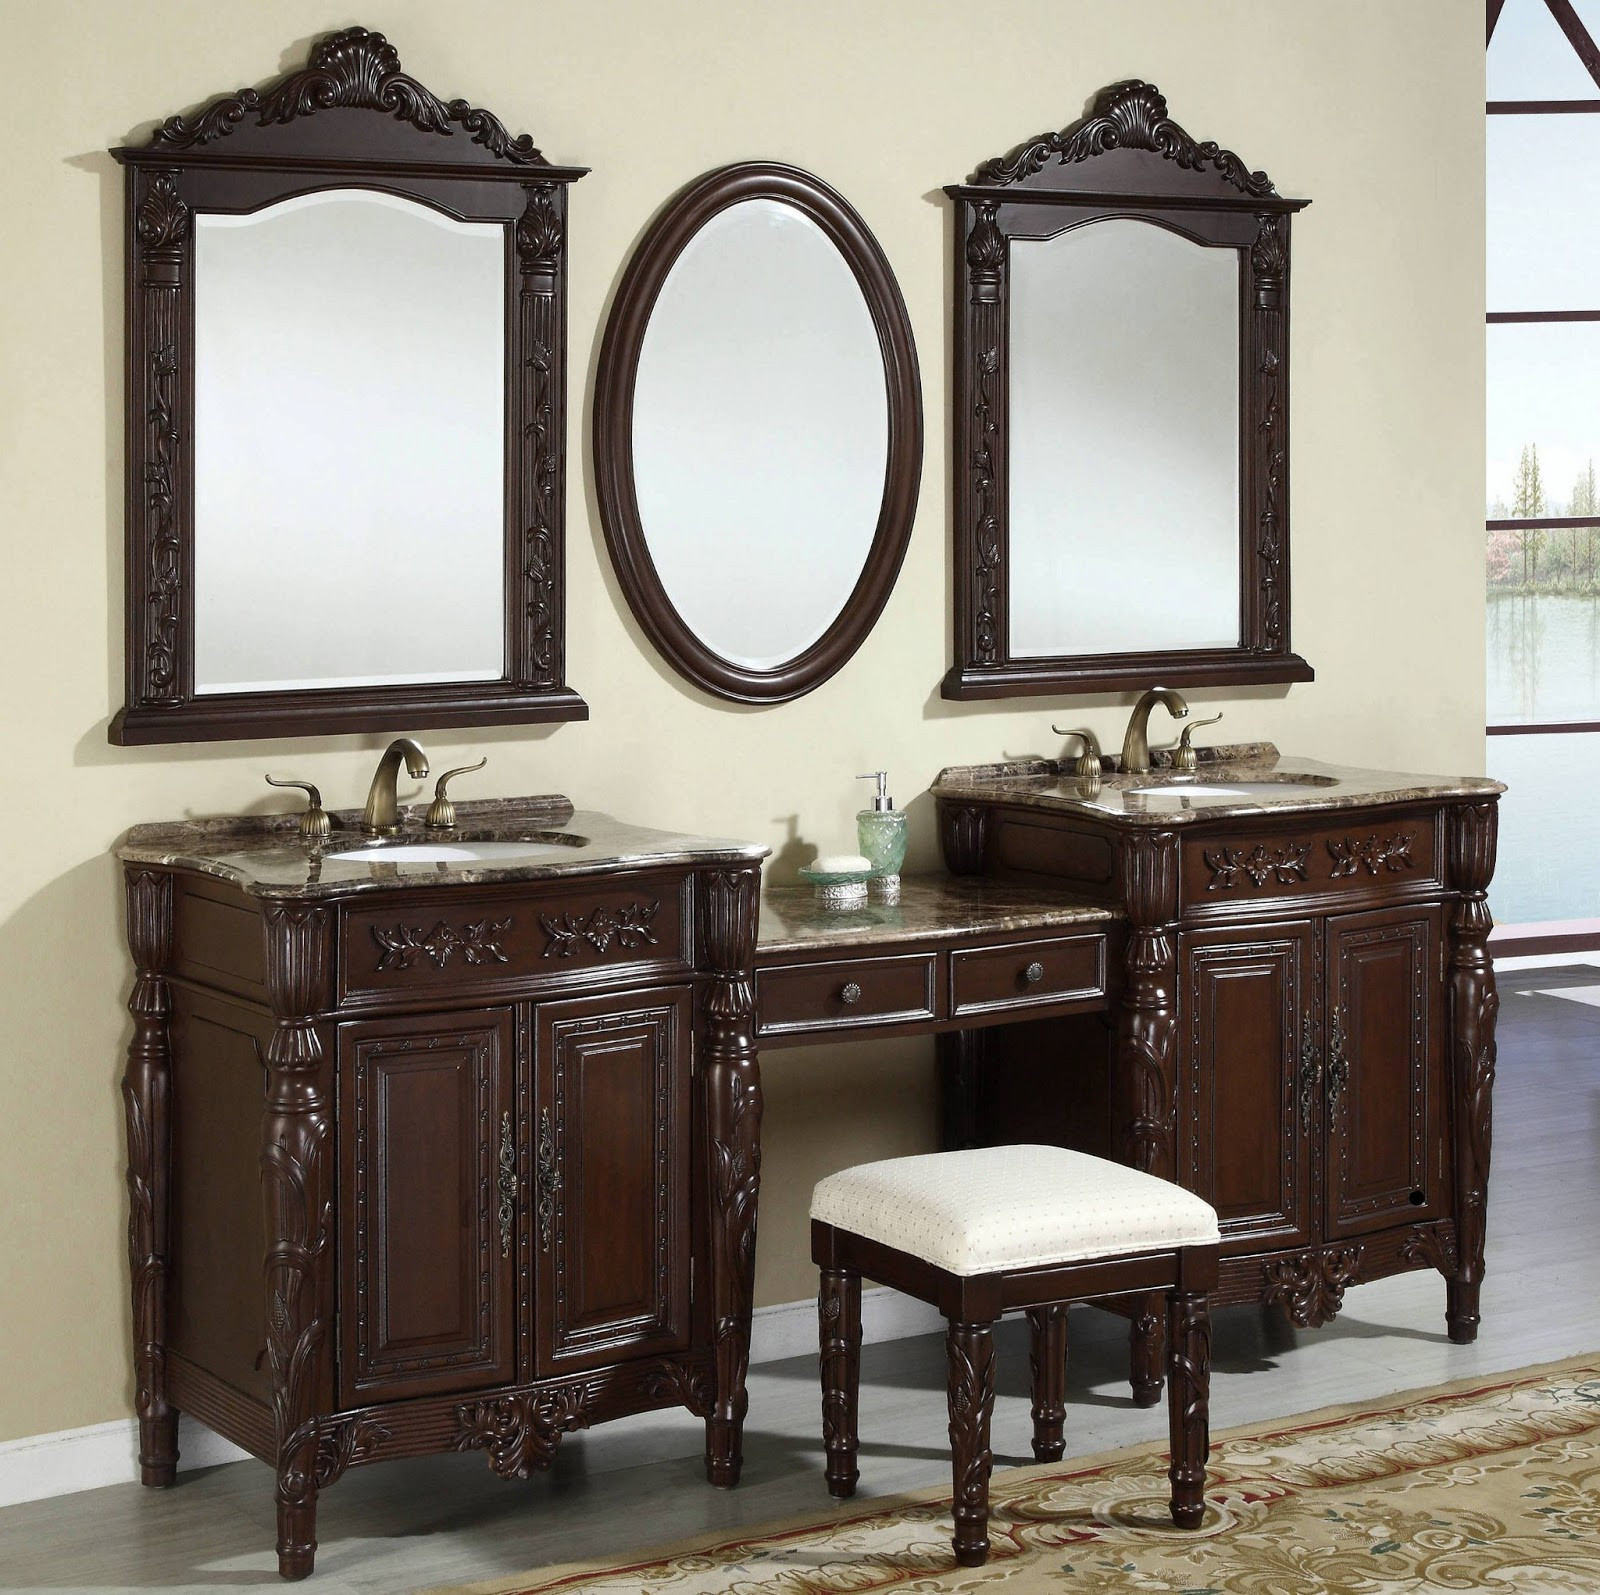 Bathroom Vanity Mirror Cabinet
 Bathroom Vanity Mirrors Models and Buying Tips Cabinets